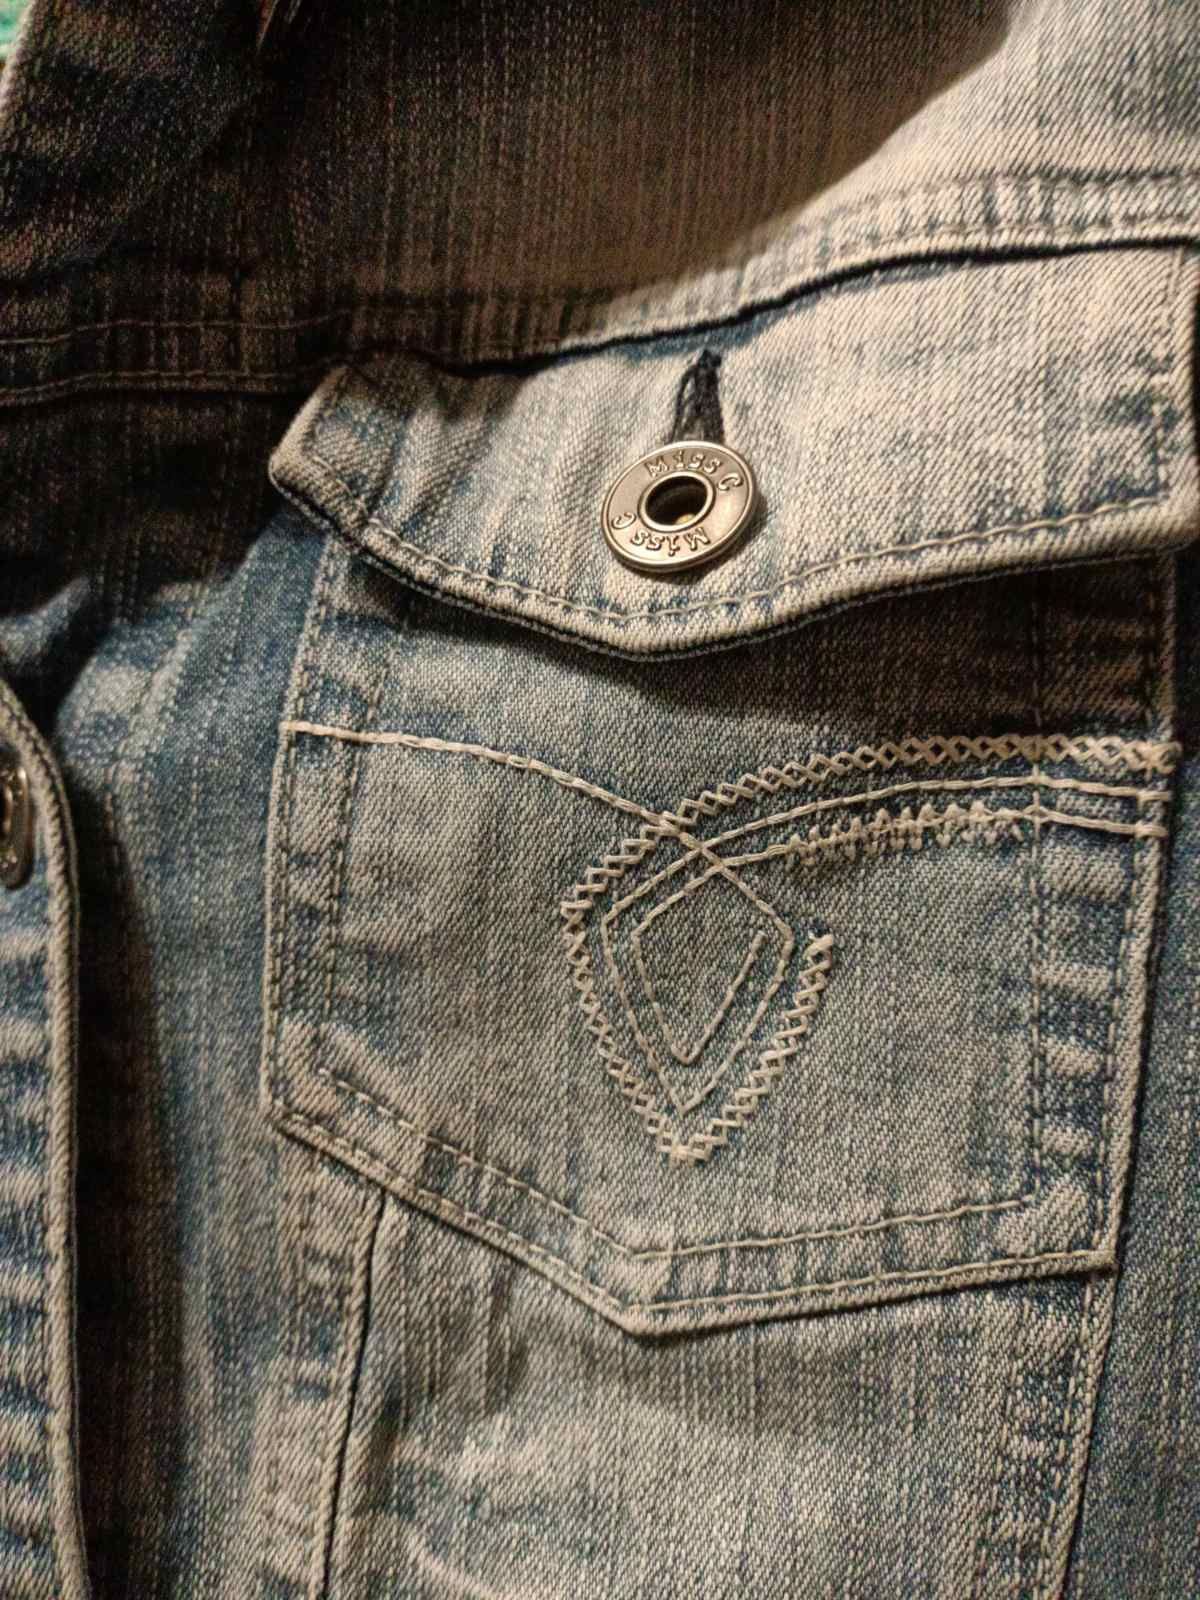 Курточка куртка рубашка джинсовая р. 42-44